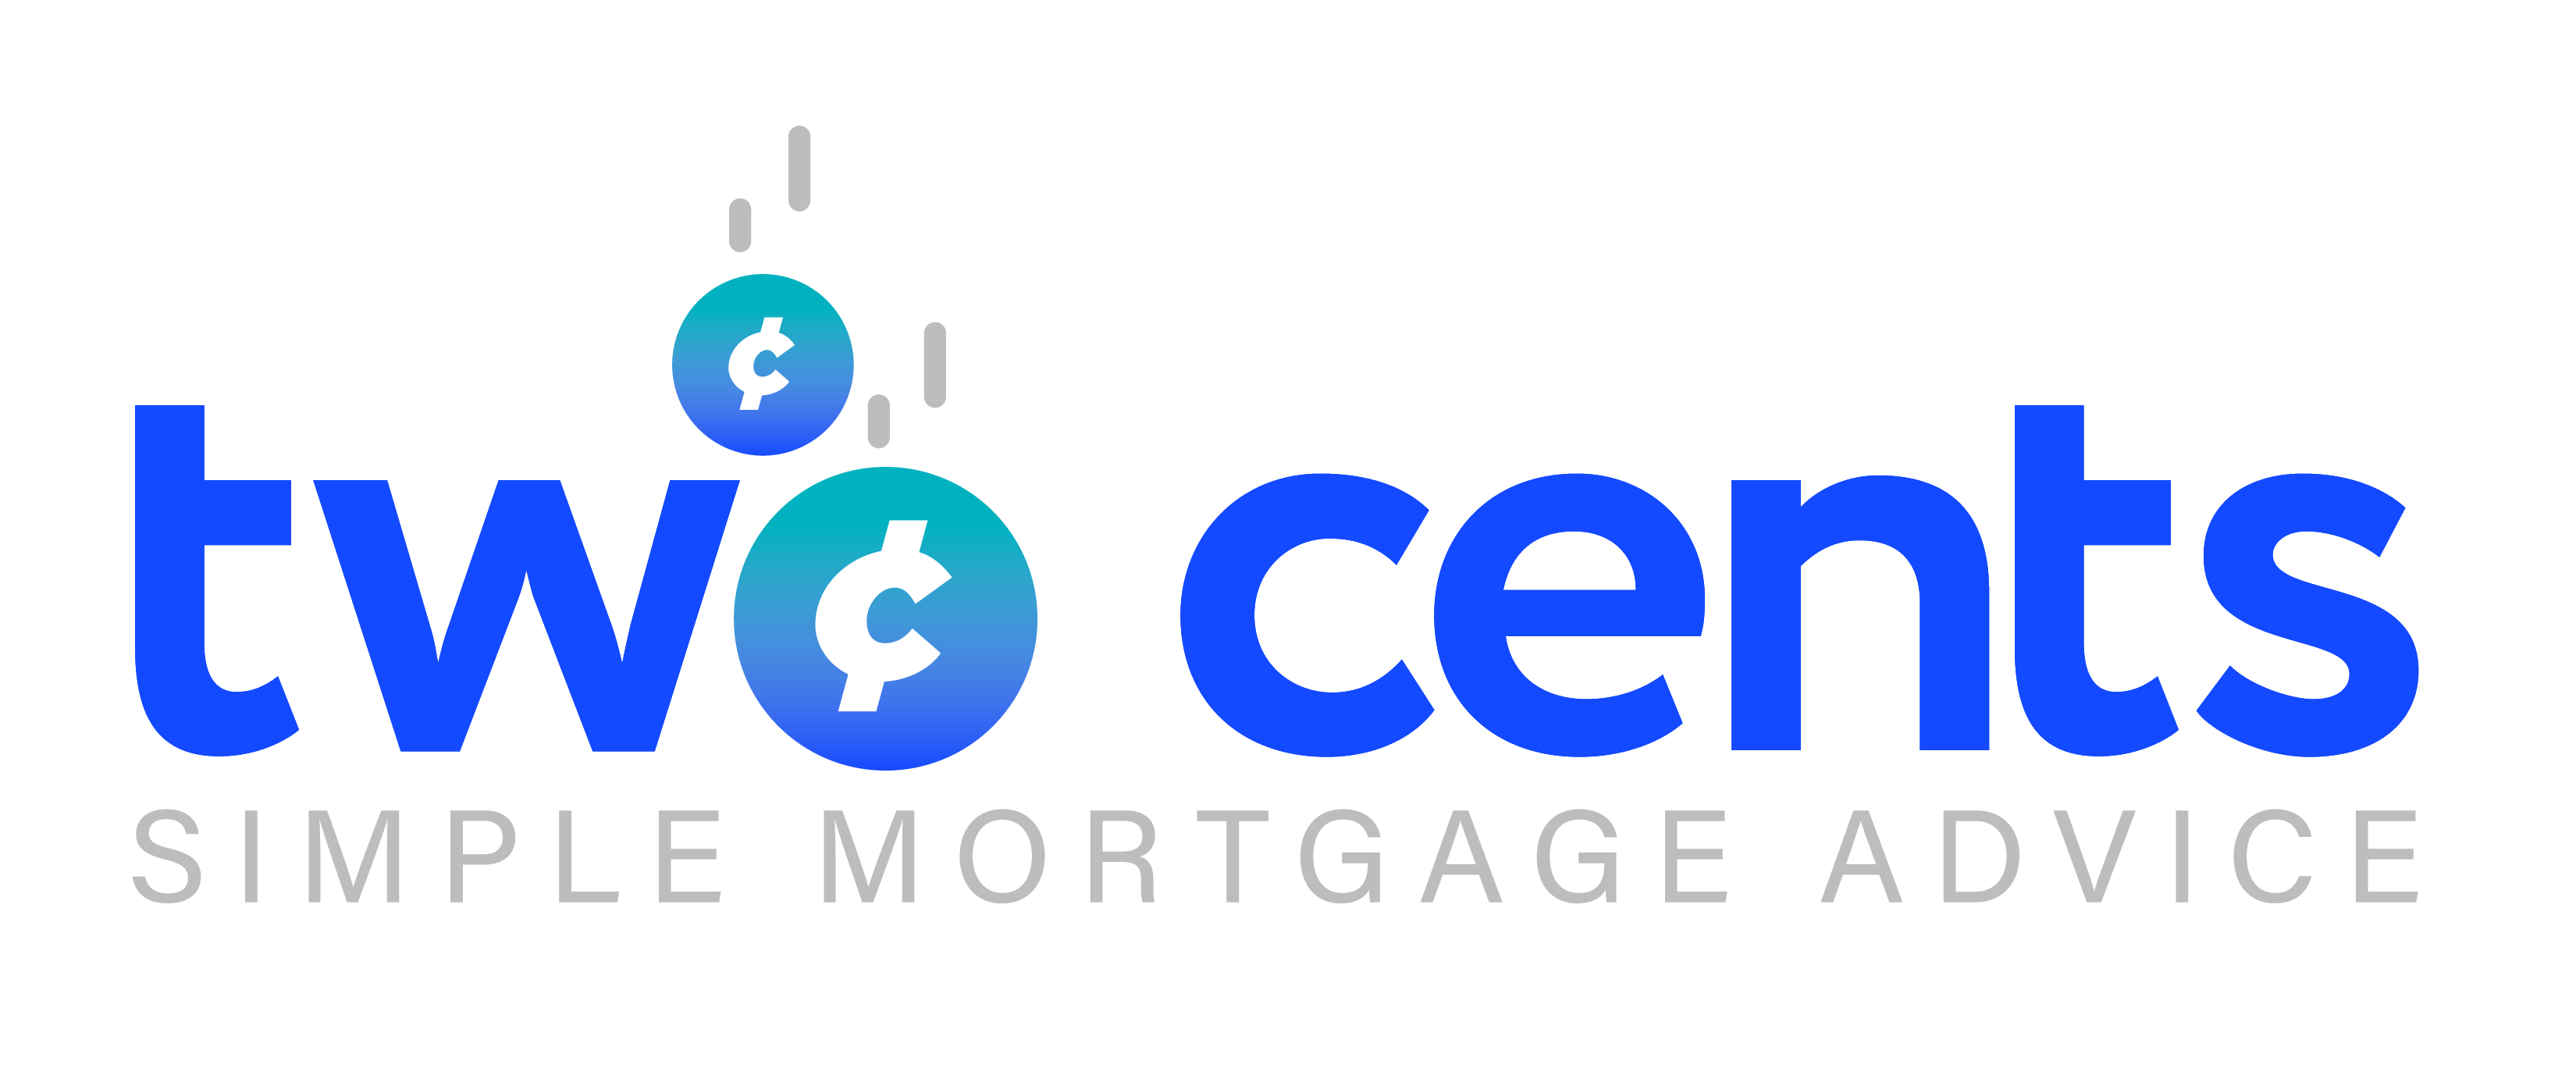 Simple mortgage advice Regan Hagestads two cents logo